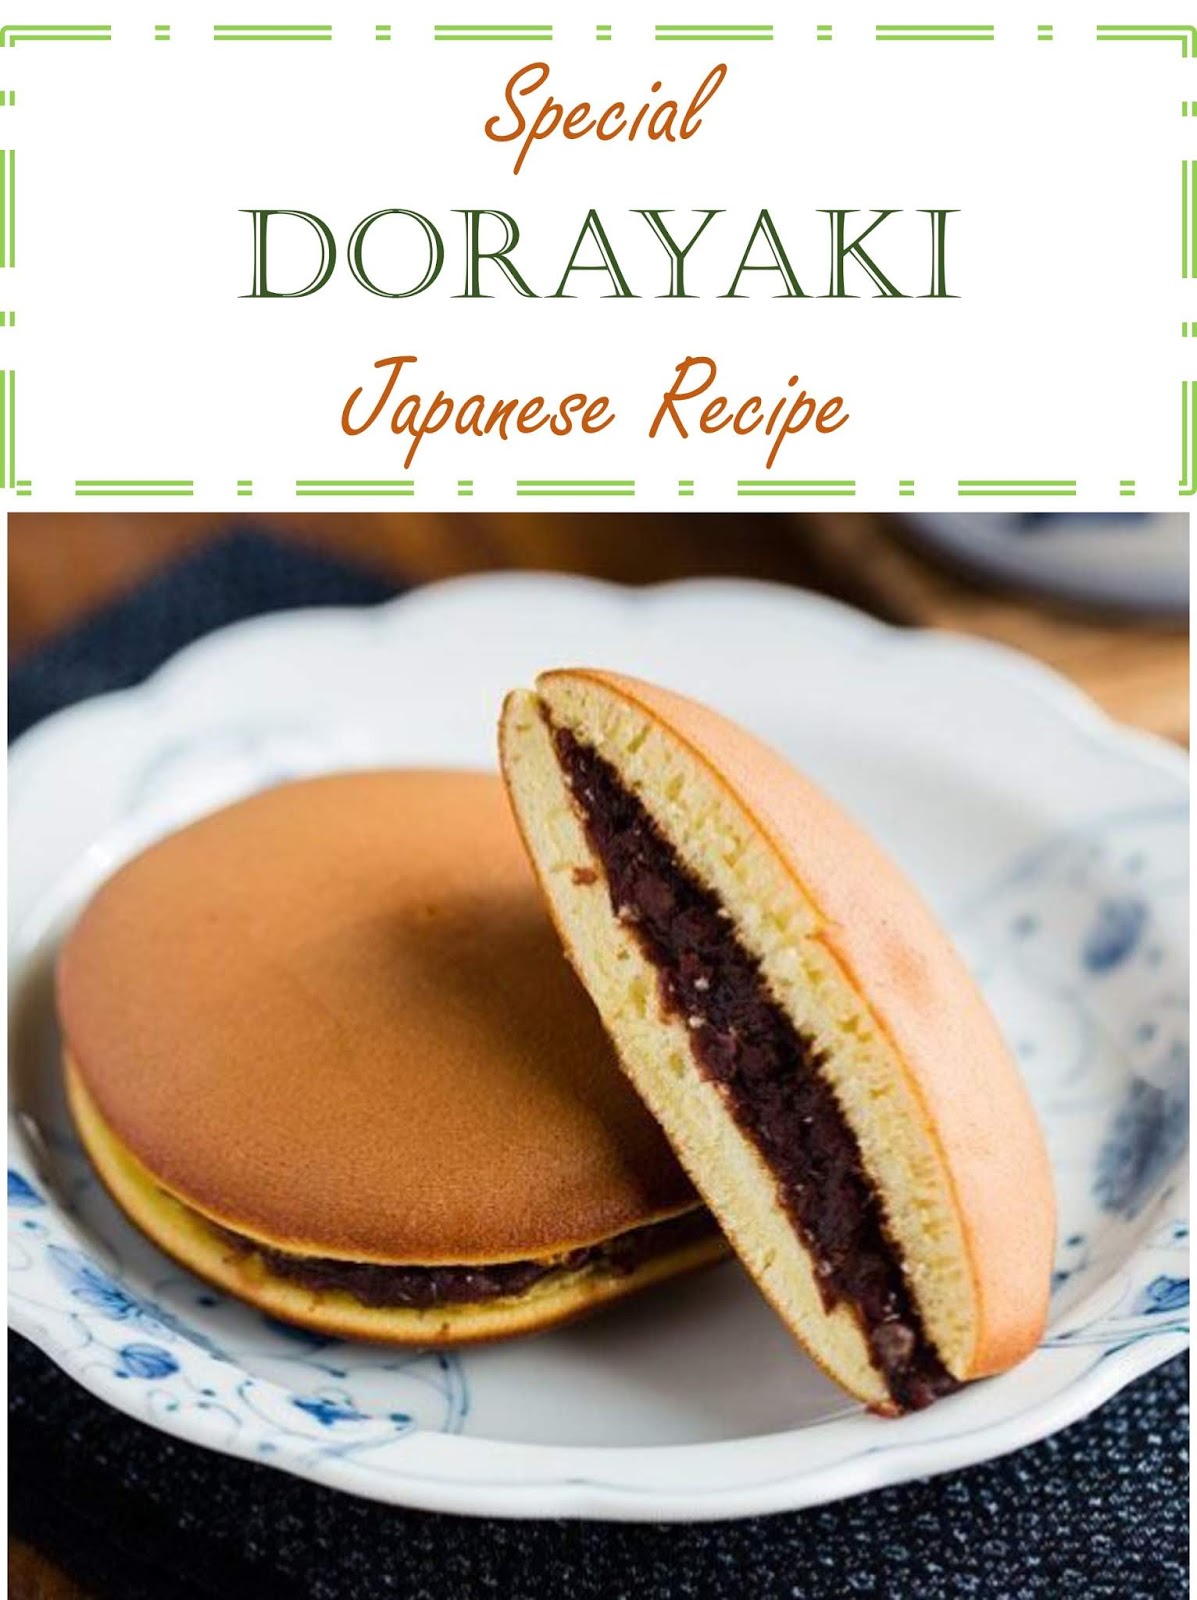 1945 Reviews: My BEST #Recipes >> Special Dorayaki Recipe - .....